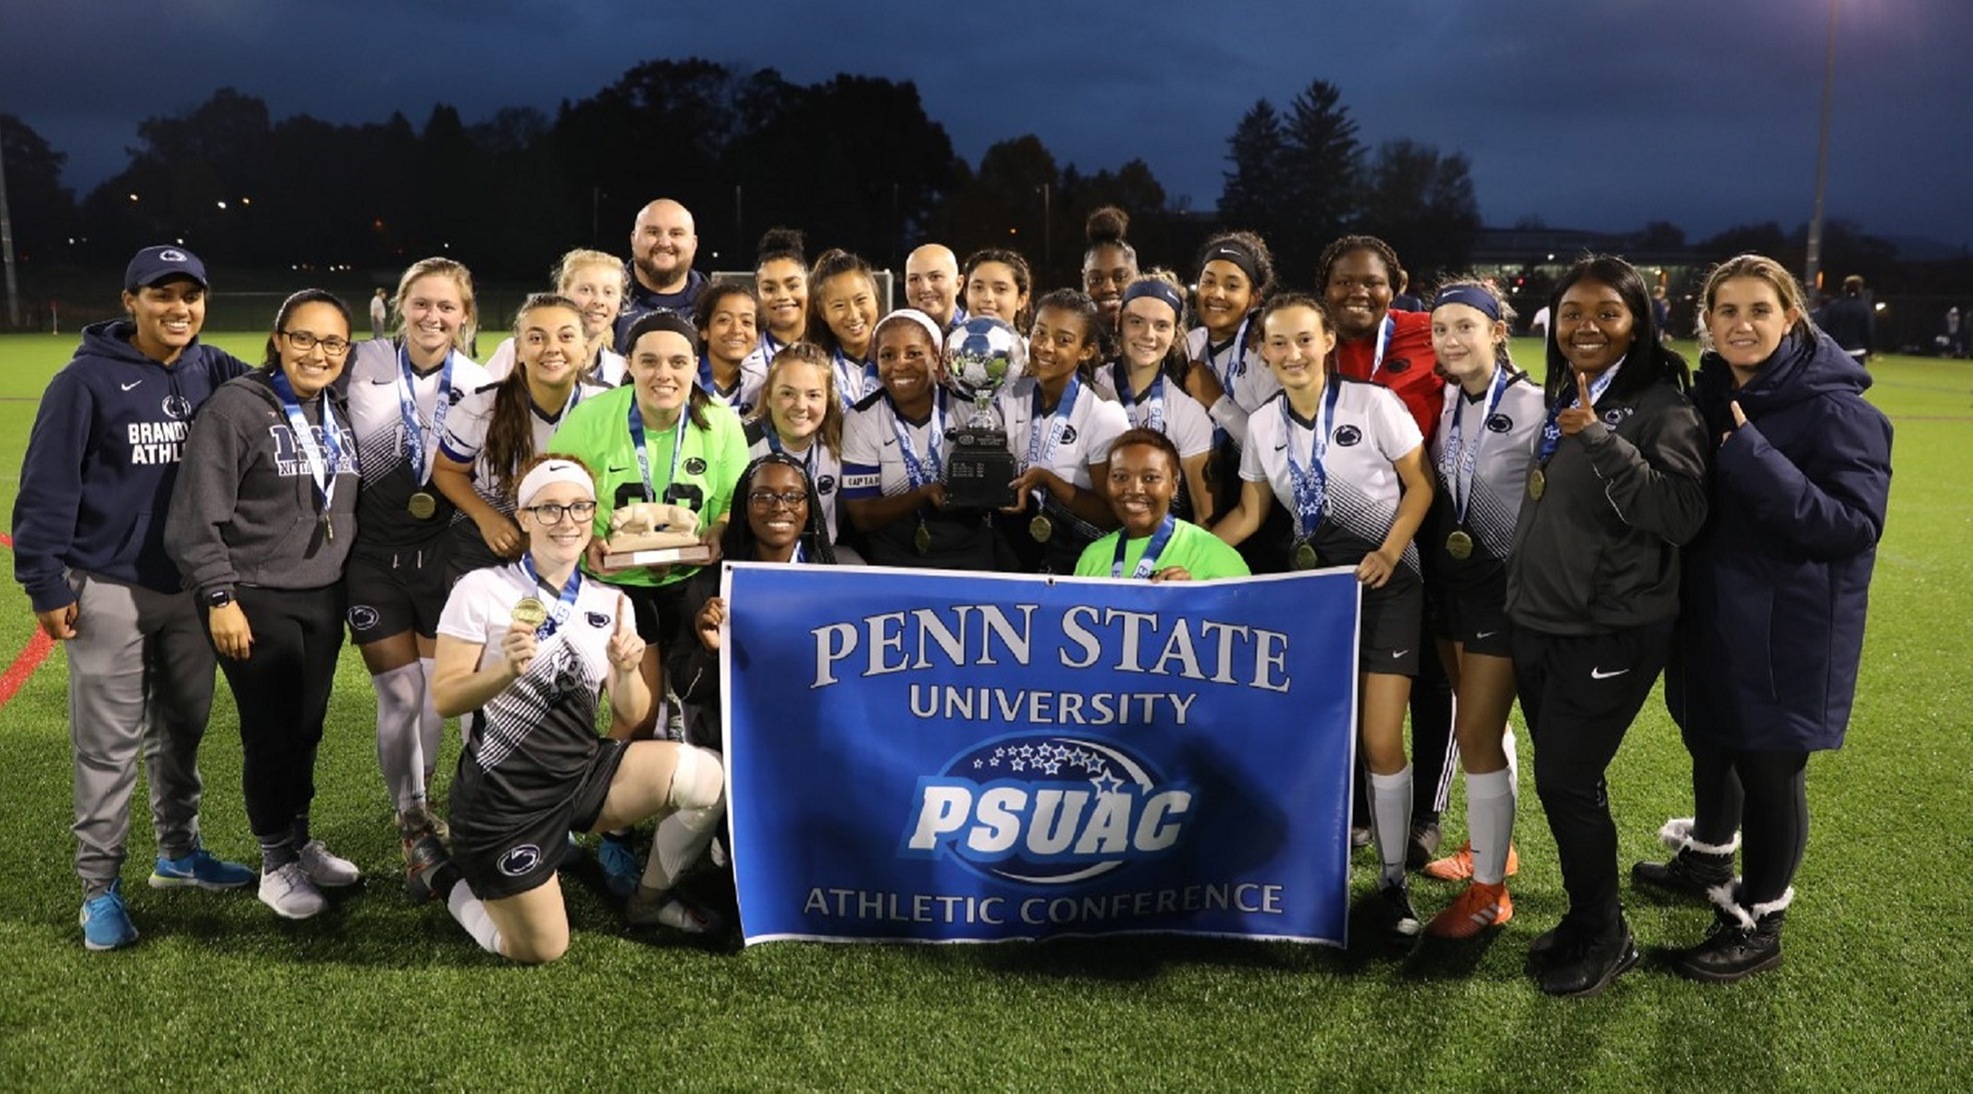 Penn State Brandywine's 2019 PSUAC Champions